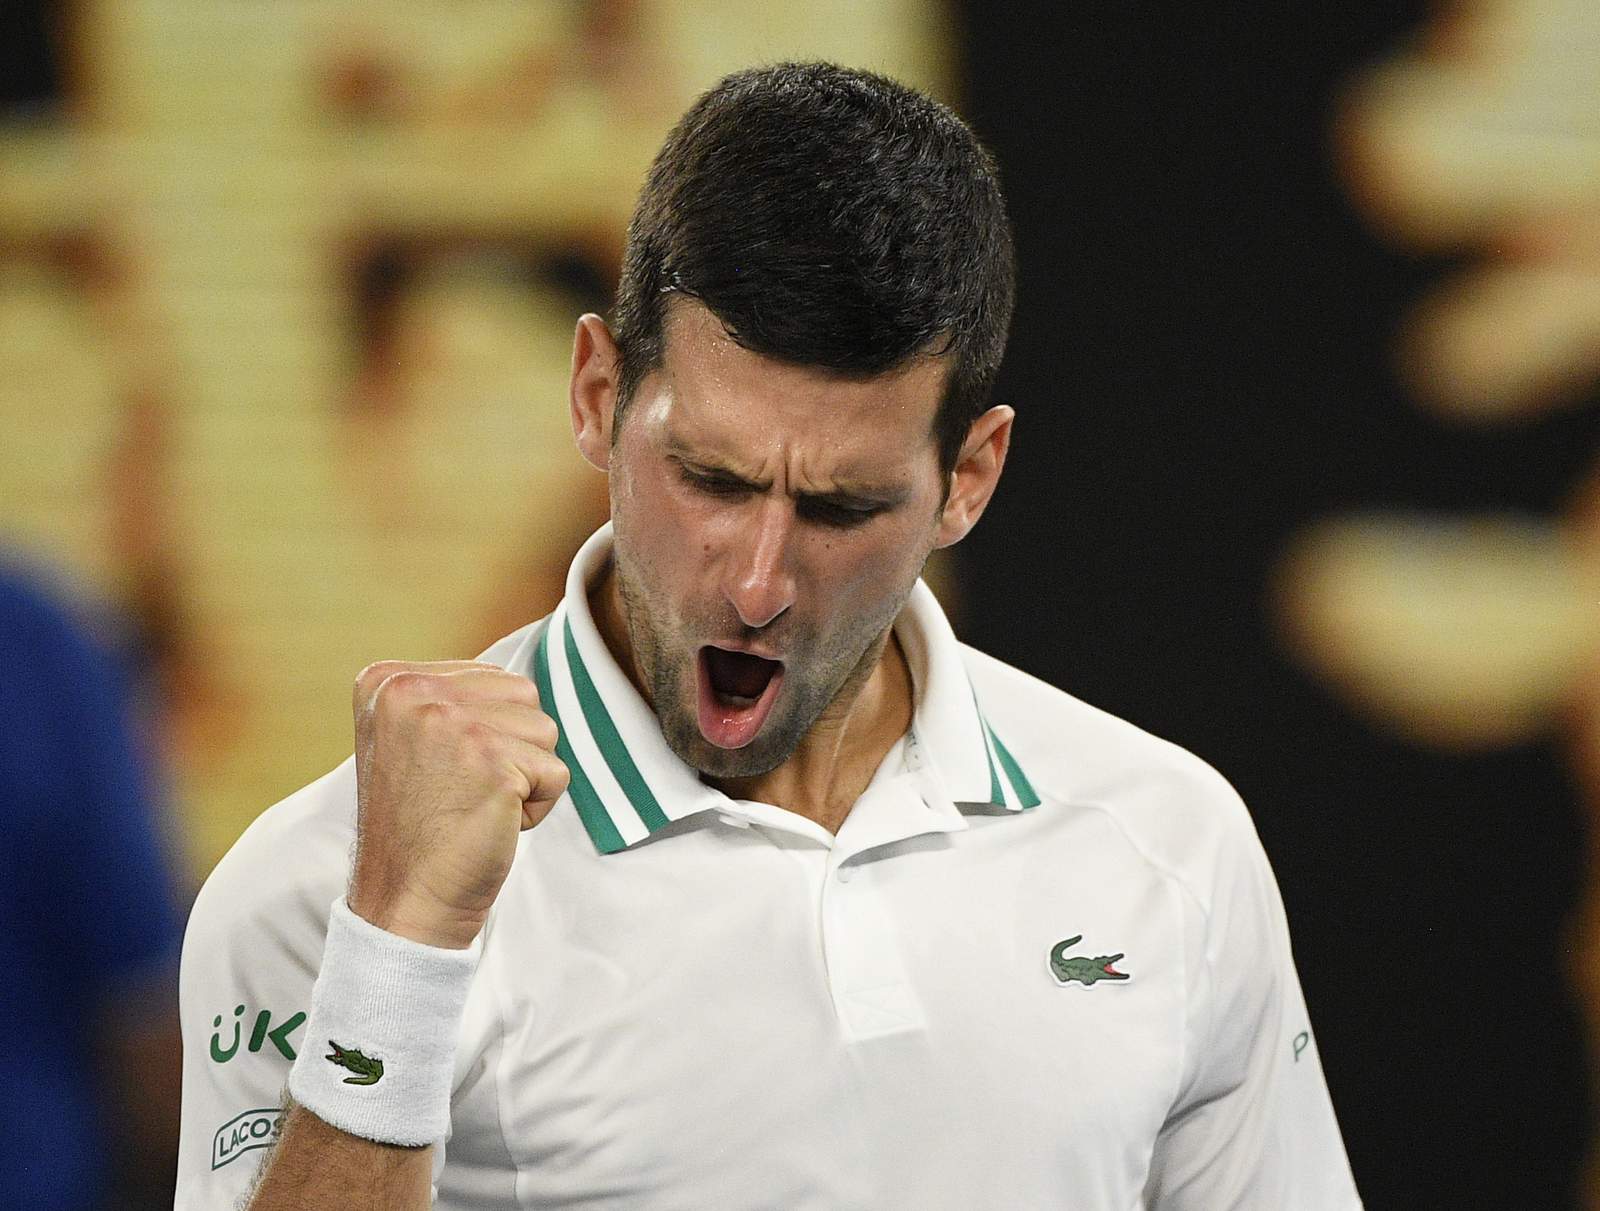 Djokovic keeps perfect record in Australian Open semifinals